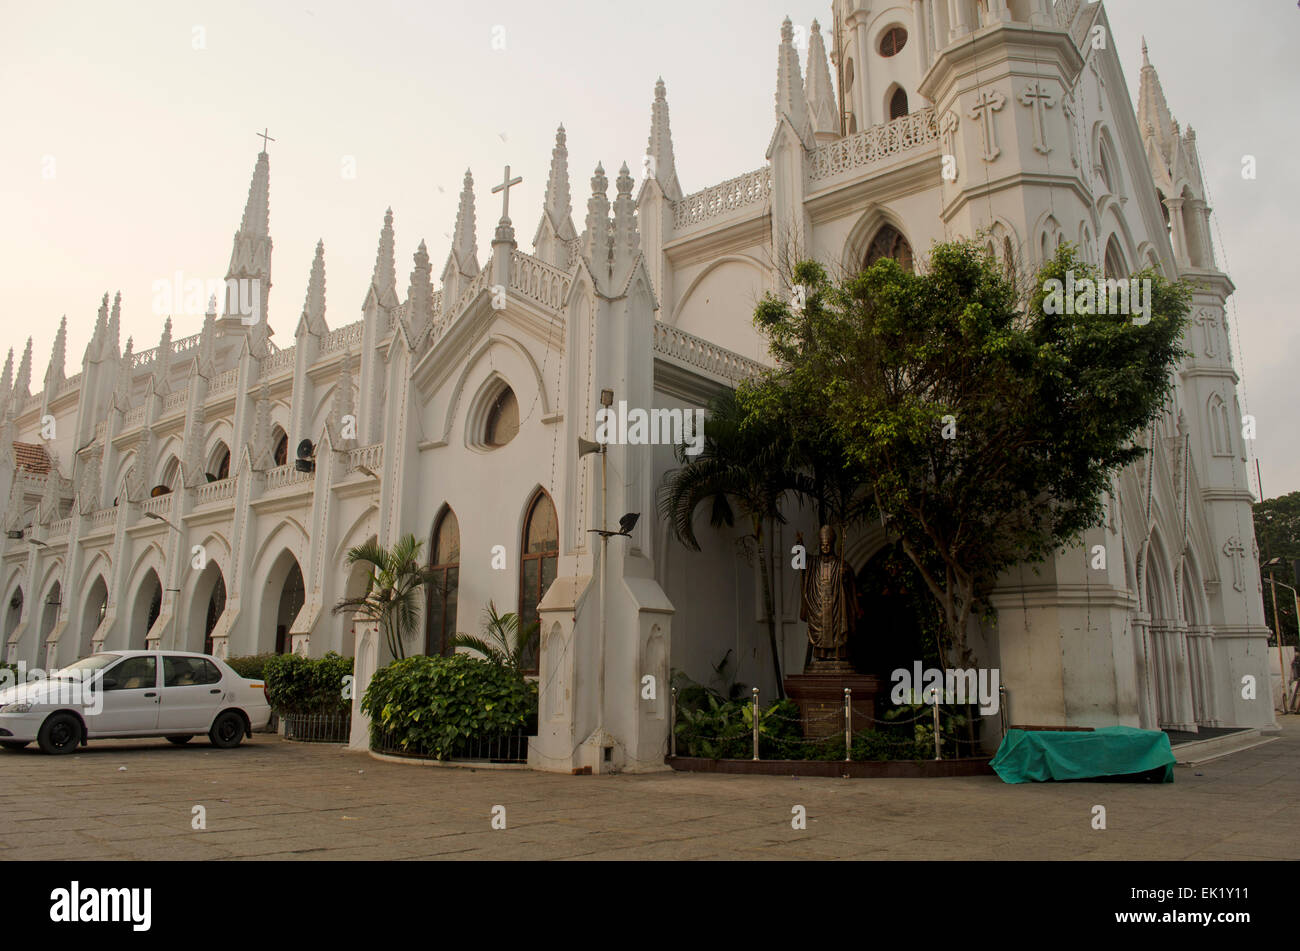 Side view of Santhome cathedral Basilica church at Chennai,Tamil Nadu,India Stock Photo